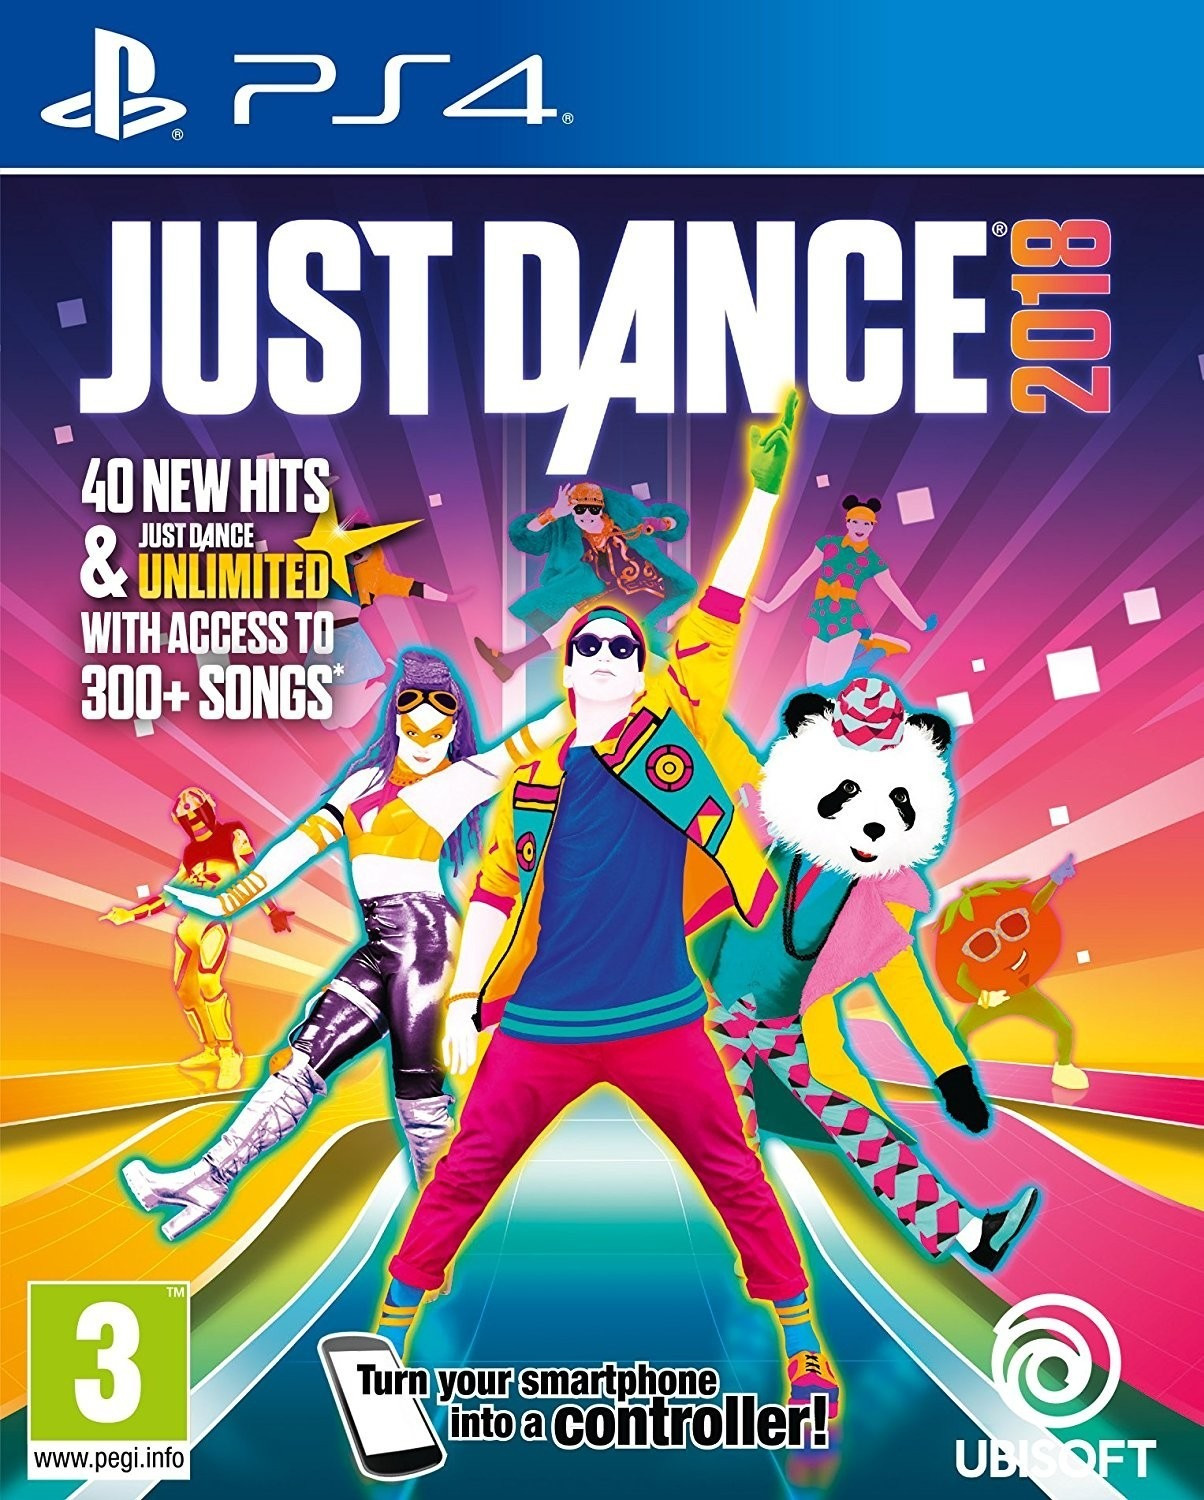 dance ps4 games download